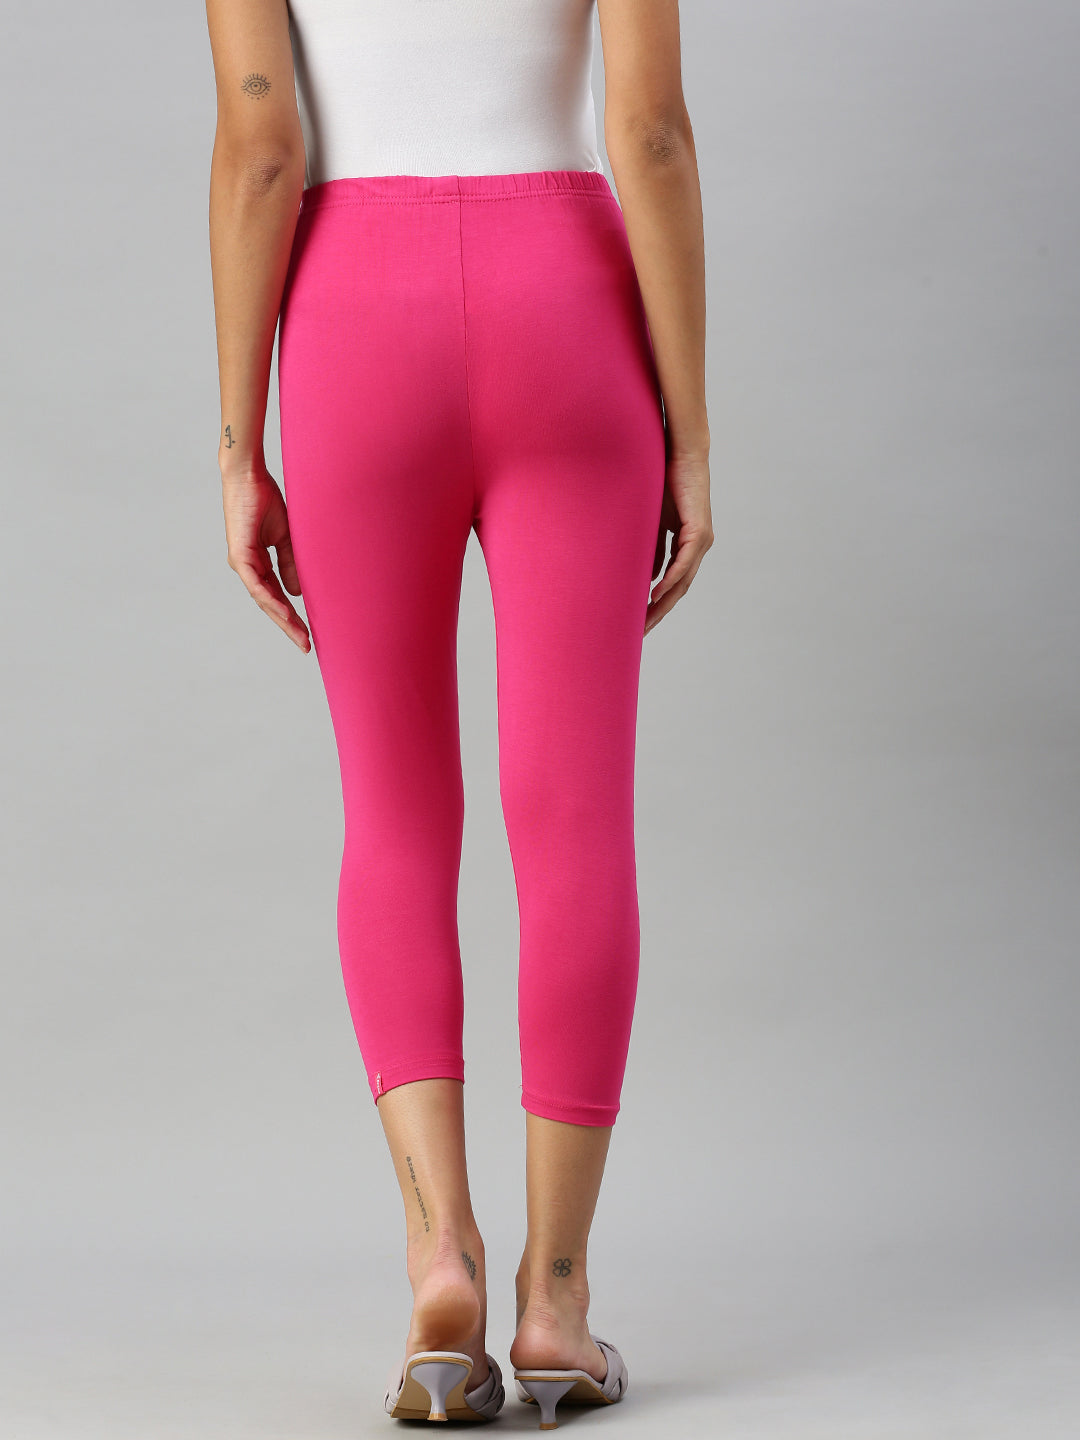 Champion Capri Women's Leggings Pink 113389-VS075